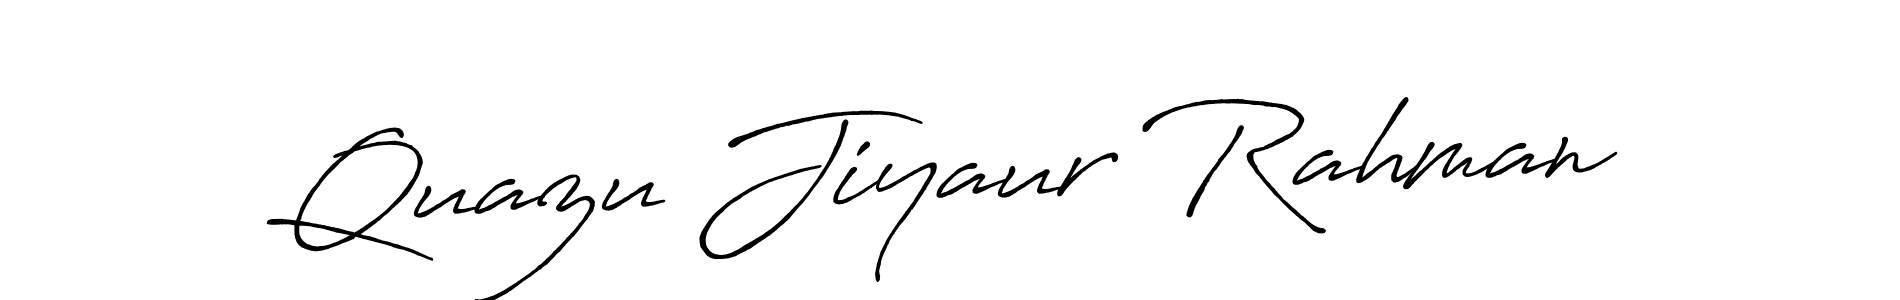 How to Draw Quazu Jiyaur Rahman signature style? Antro_Vectra_Bolder is a latest design signature styles for name Quazu Jiyaur Rahman. Quazu Jiyaur Rahman signature style 7 images and pictures png